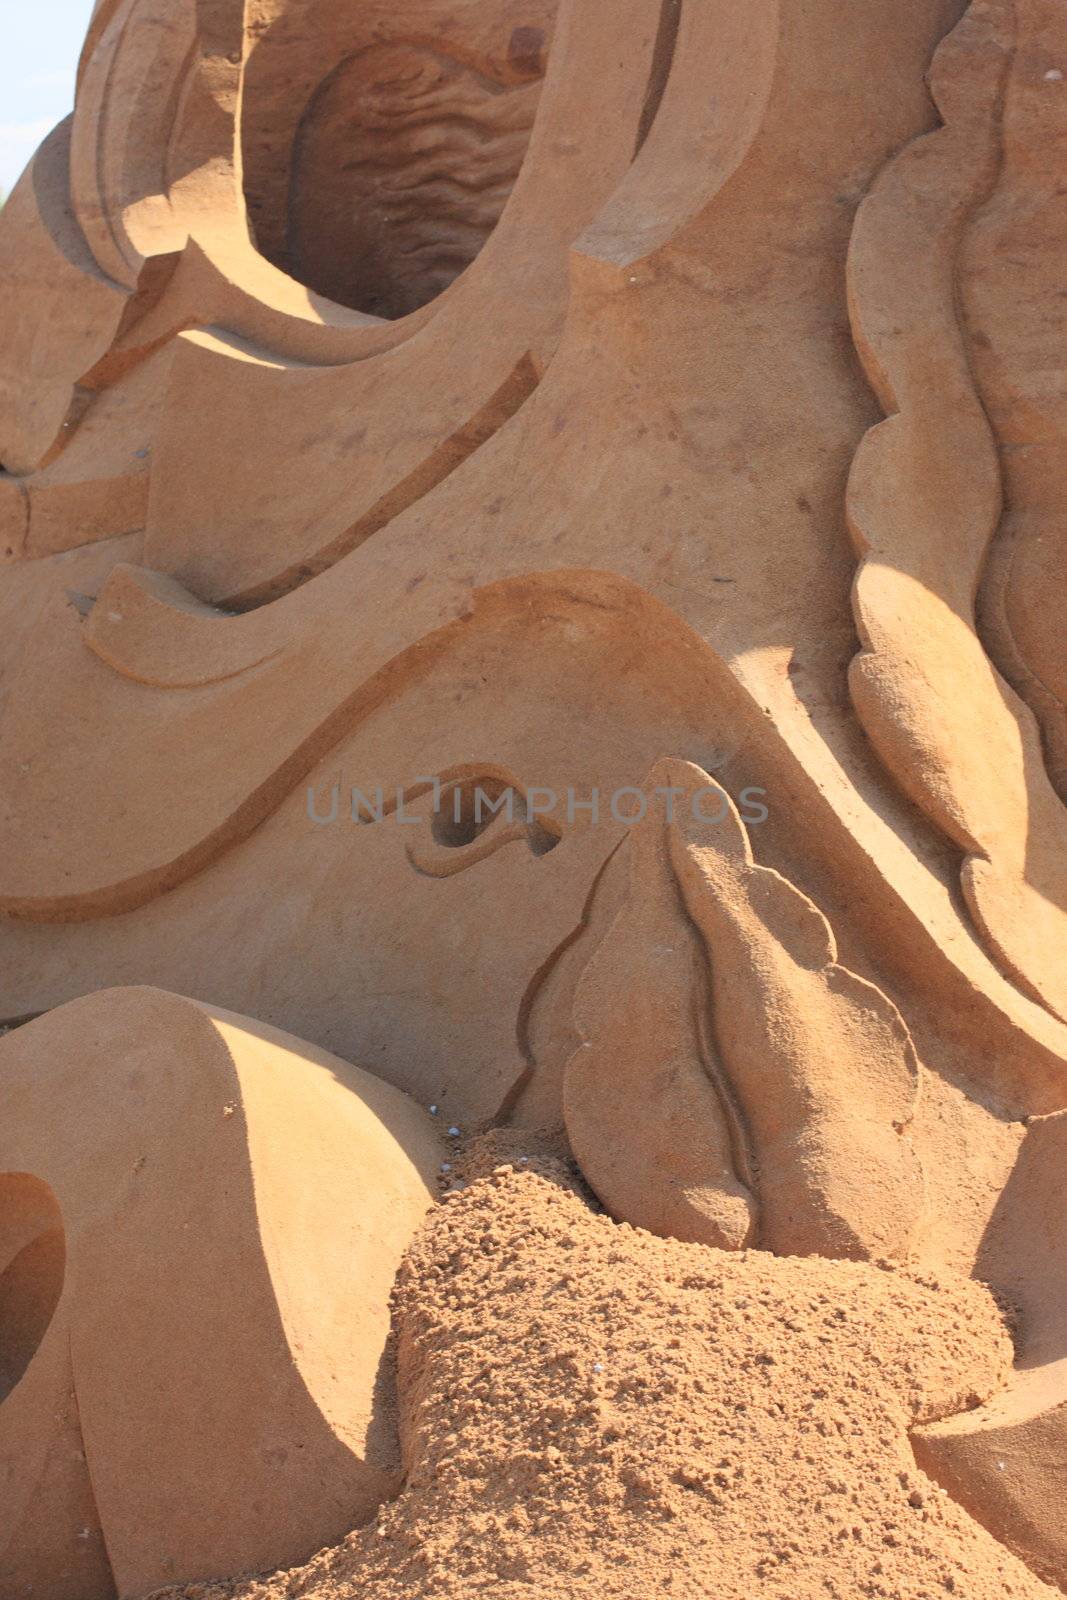 Sculpture, sand, an eye, an exhibition, product, art,  image